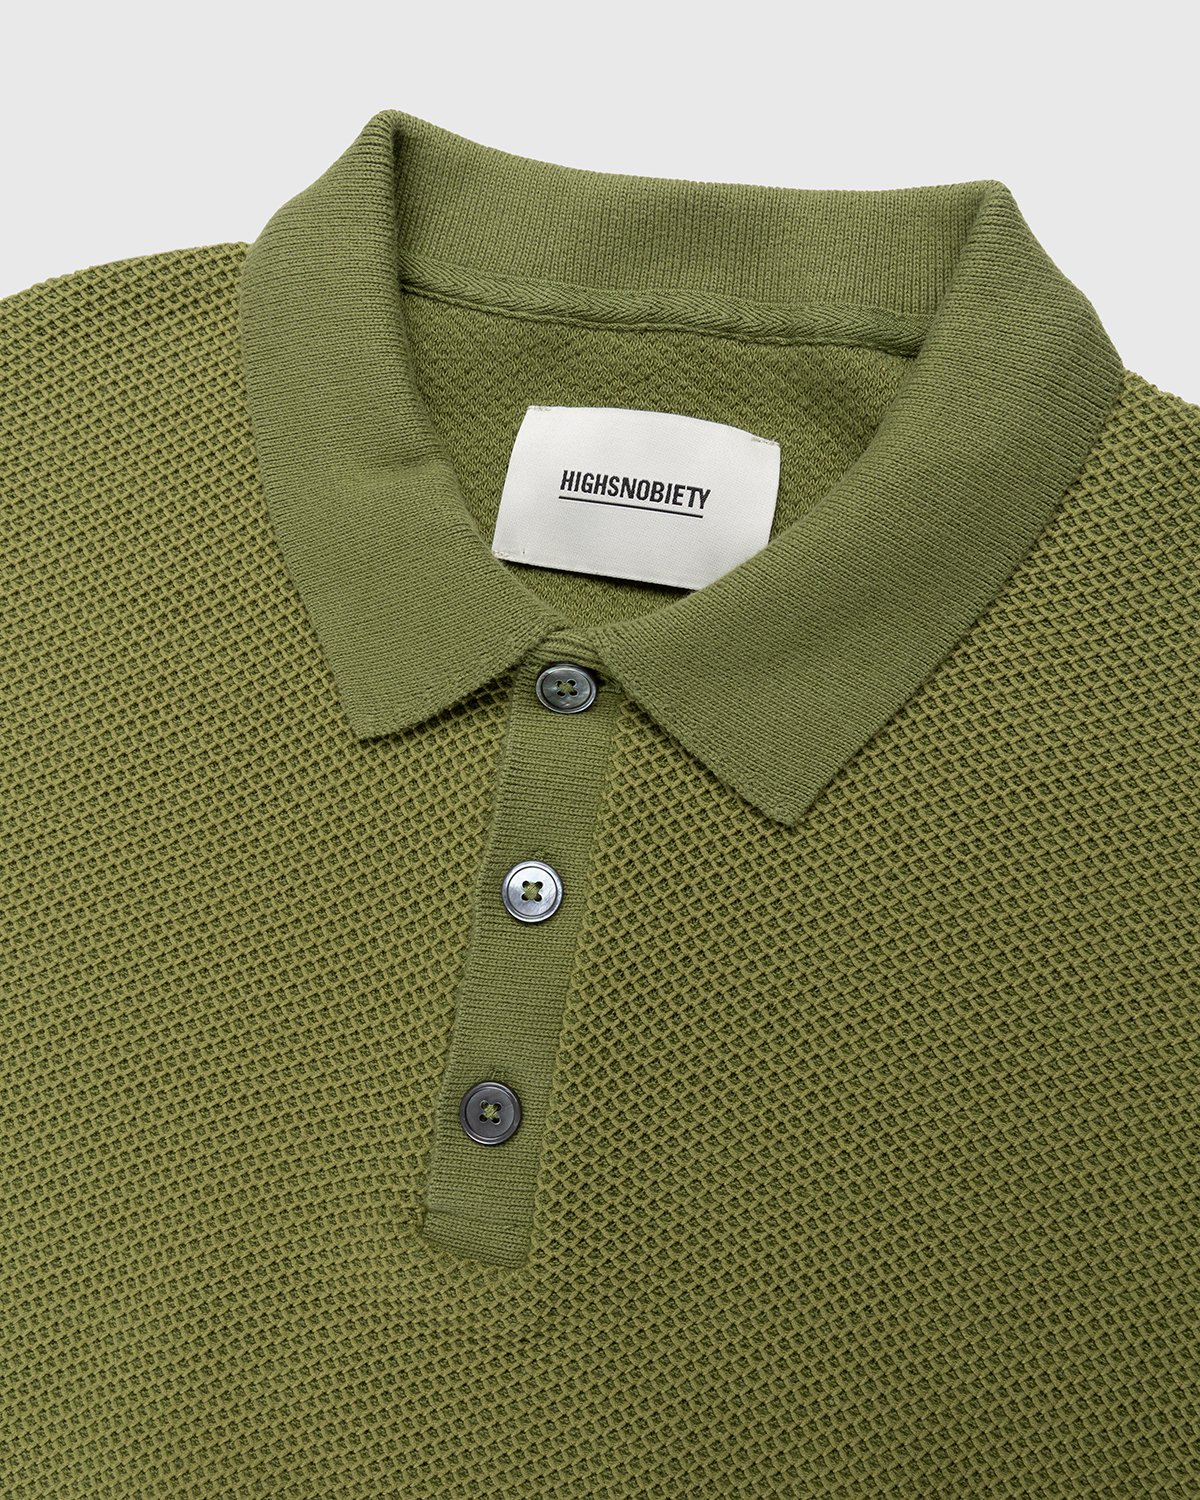 Highsnobiety - Knit Short-Sleeve Polo Green - Clothing - Green - Image 4